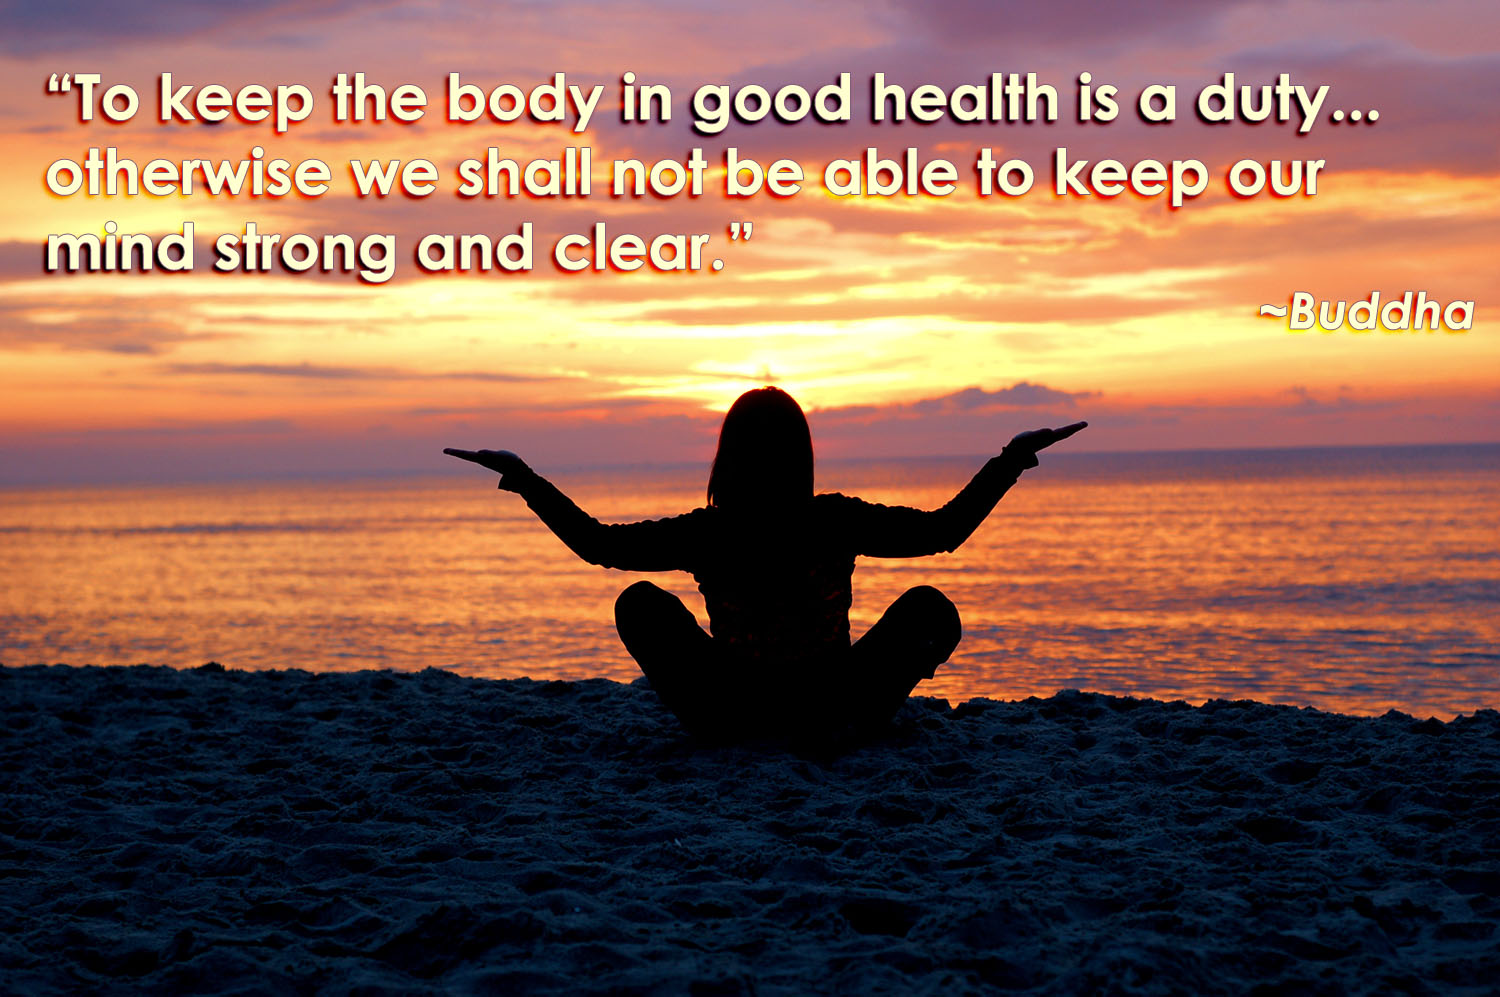 Buddha-Body-Good-Health-Duty-Keep-Mind-Strong-and-Clear.jpg